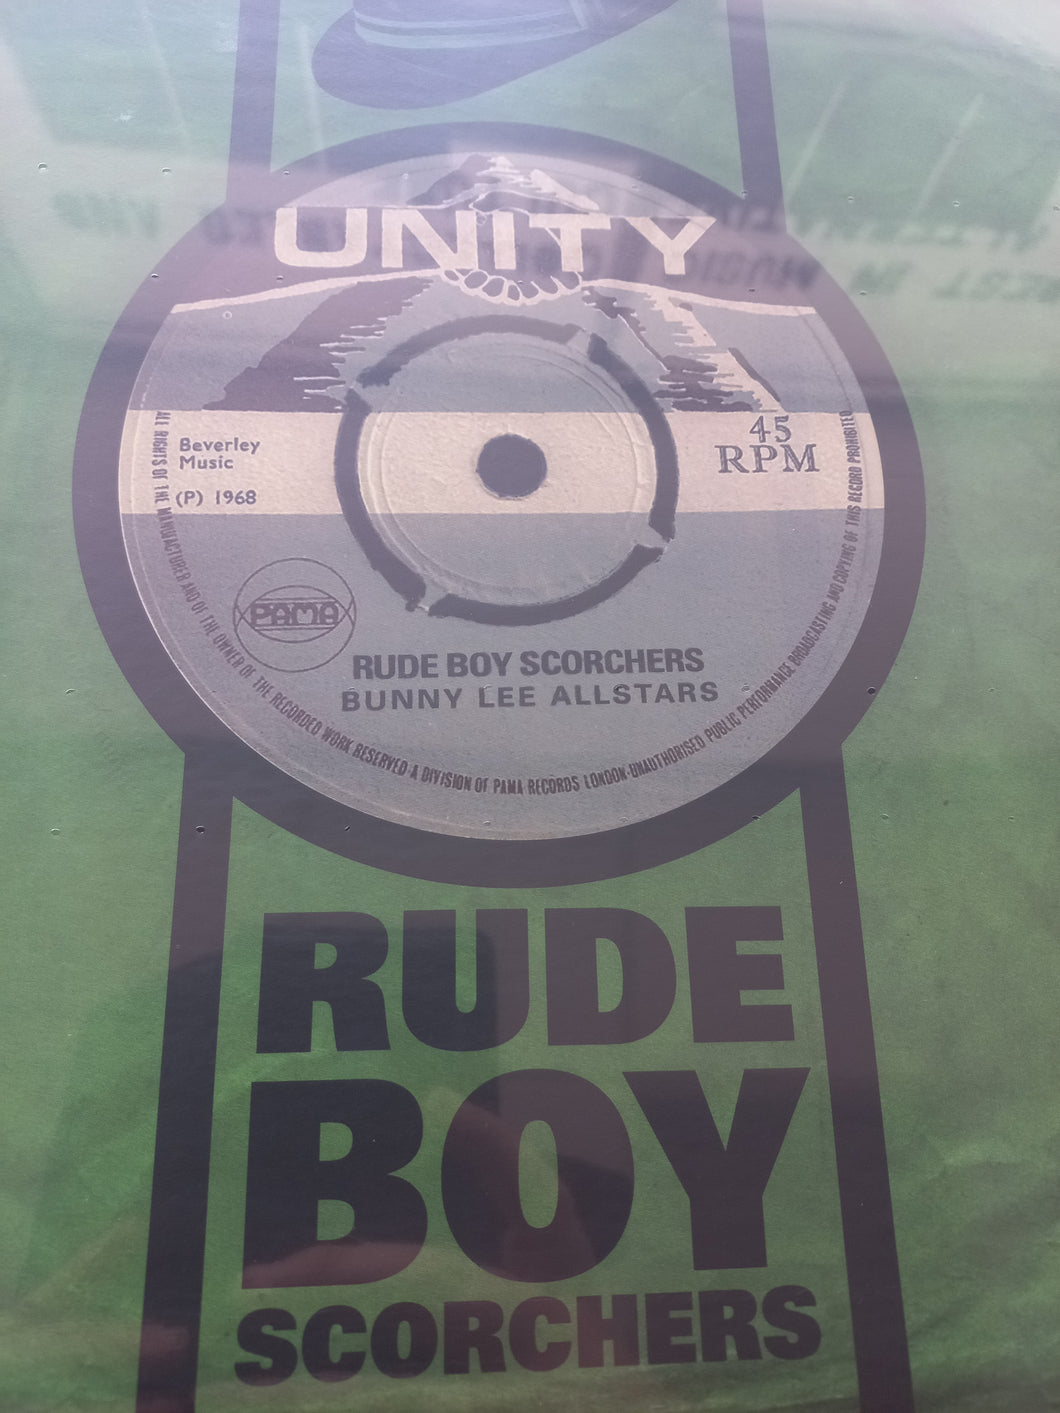 Rude Boy Scorchers - various